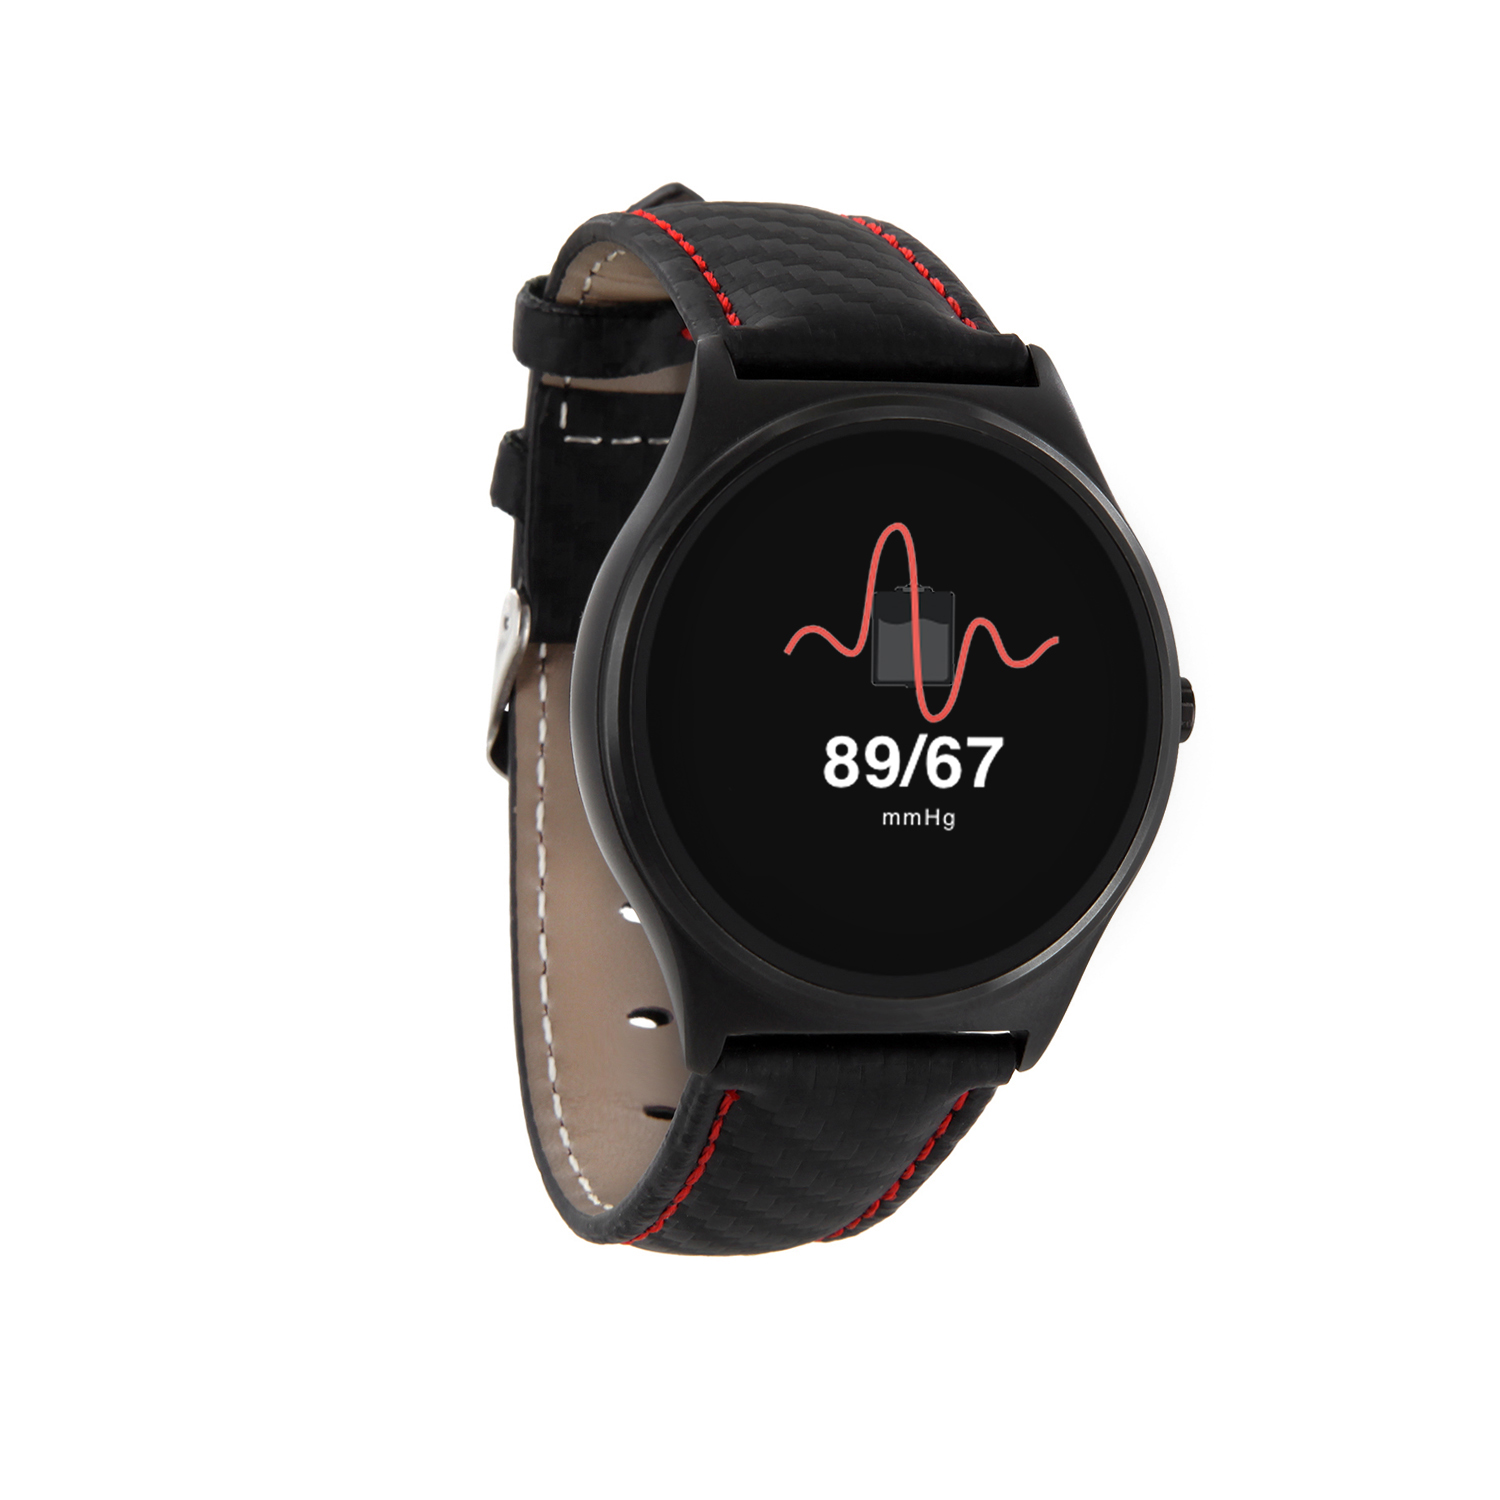 Armband: Black Carbon 54016 mm, / XW Chrome 22 CARBON x XLYNE Metall mm Echtleder, PRIME II - QIN Gehäuse: Smartwatch Black RED Red X-WATCH BLACK 210